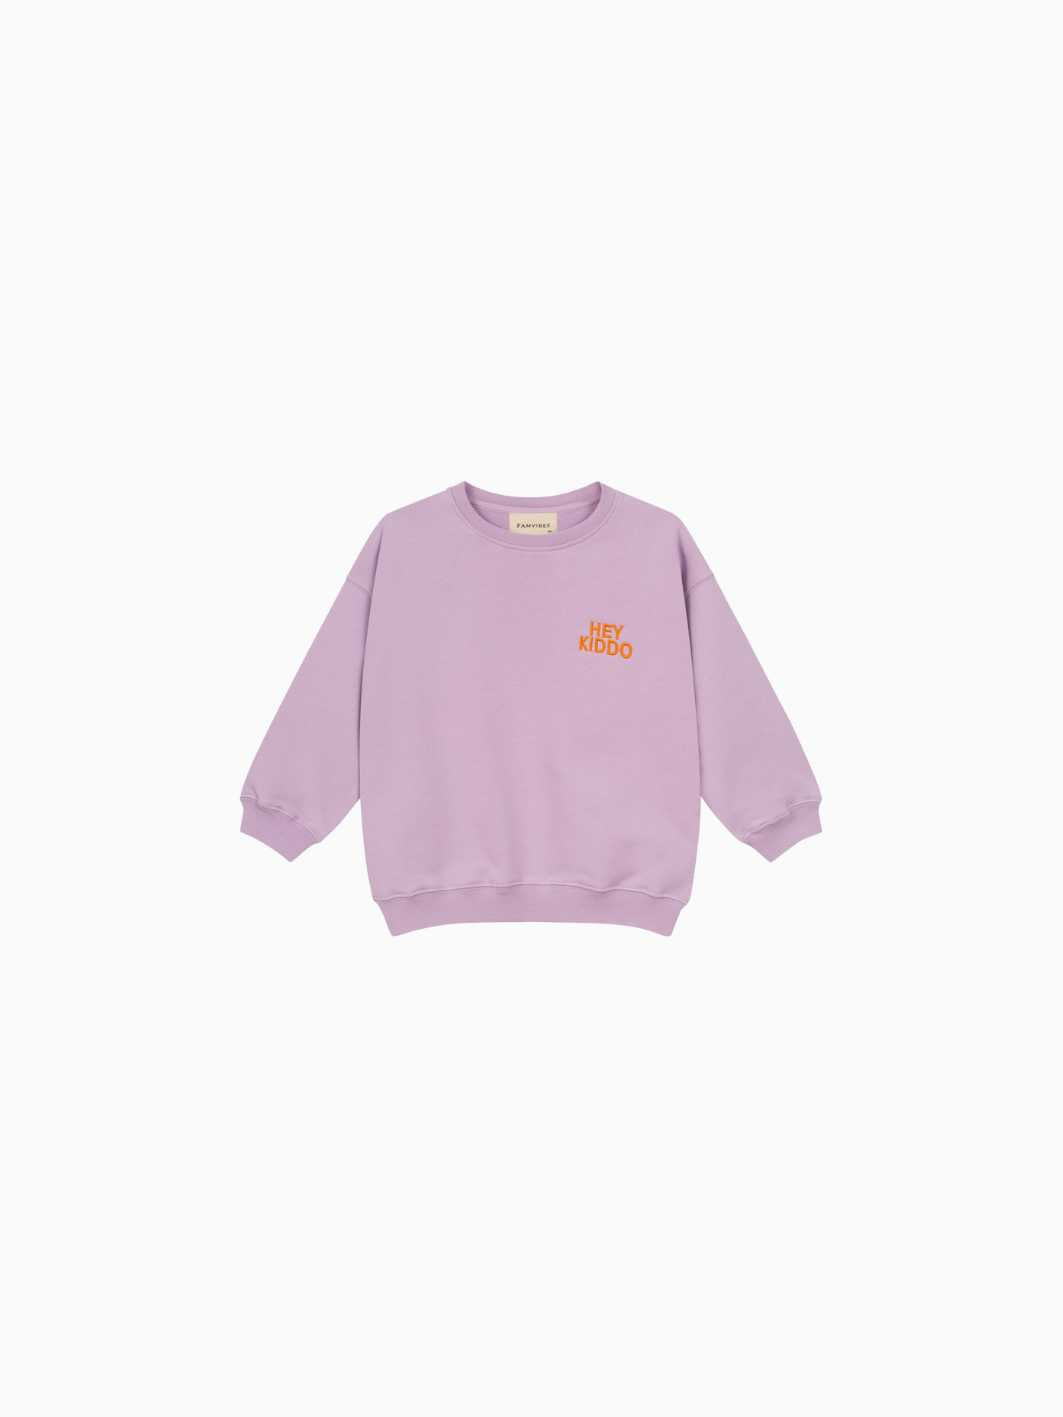 HEY KIDDO Sweatshirt - lavender/ orange - FAMVIBES 